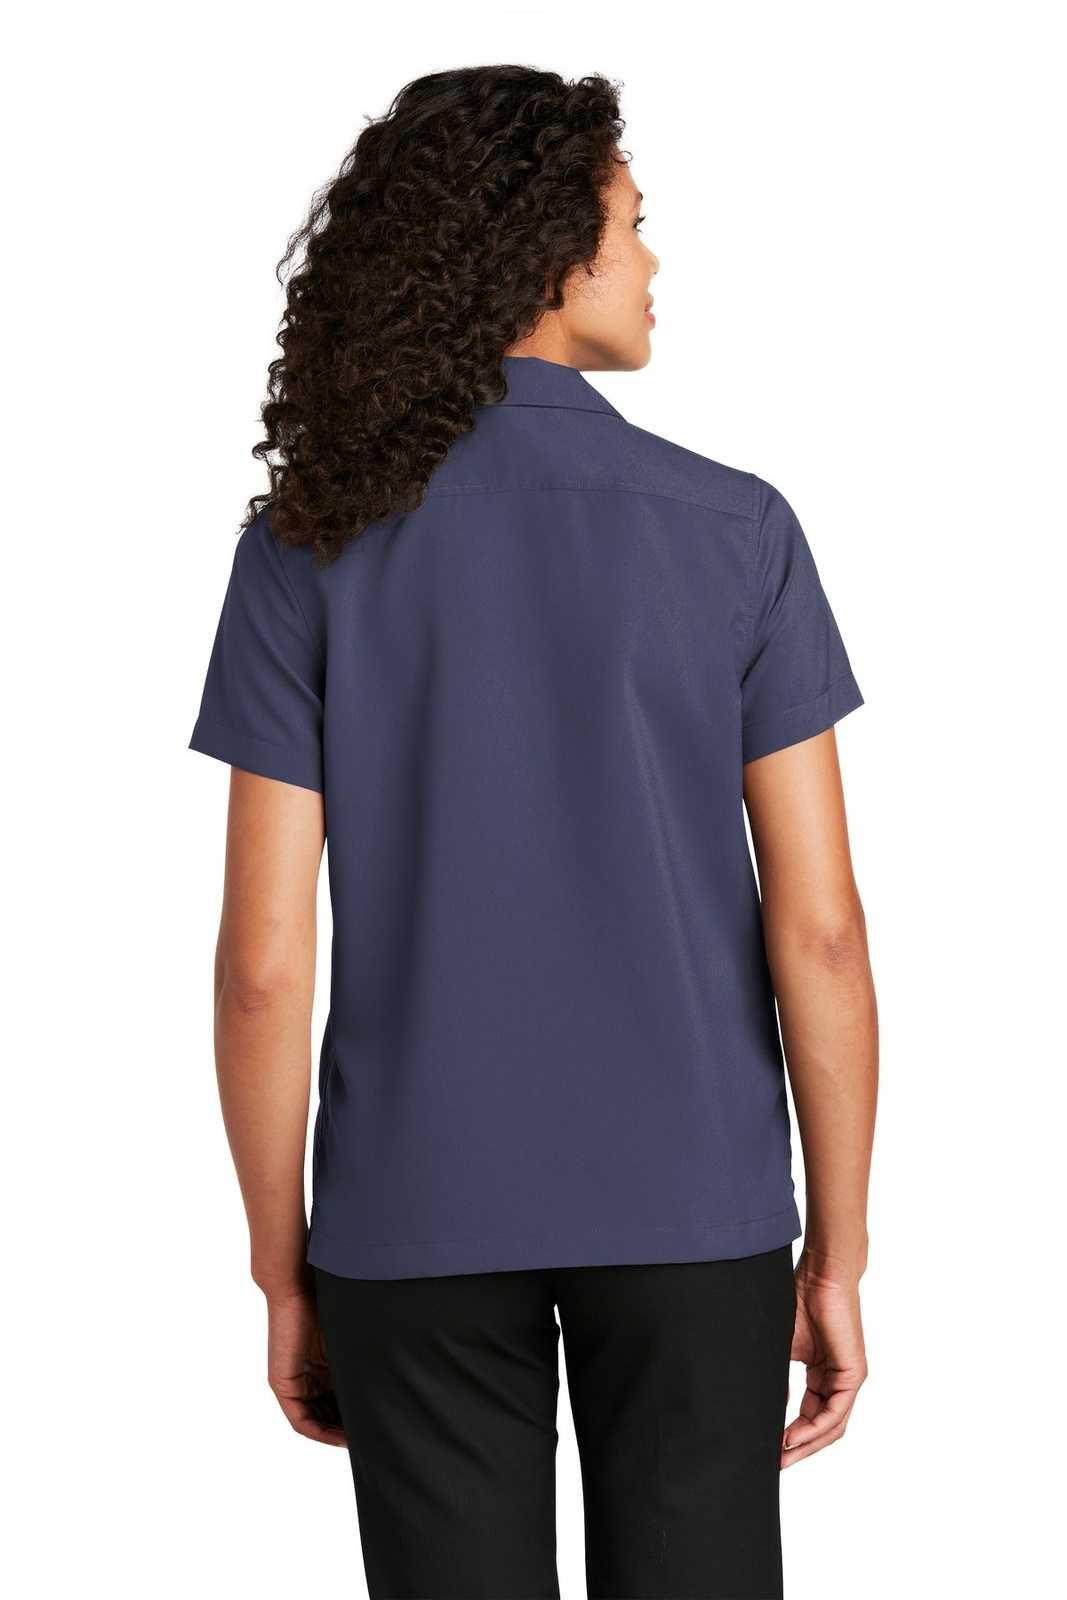 Port Authority LW400 Ladies Short Sleeve Performance Staff Shirt - True Navy - HIT a Double - 1